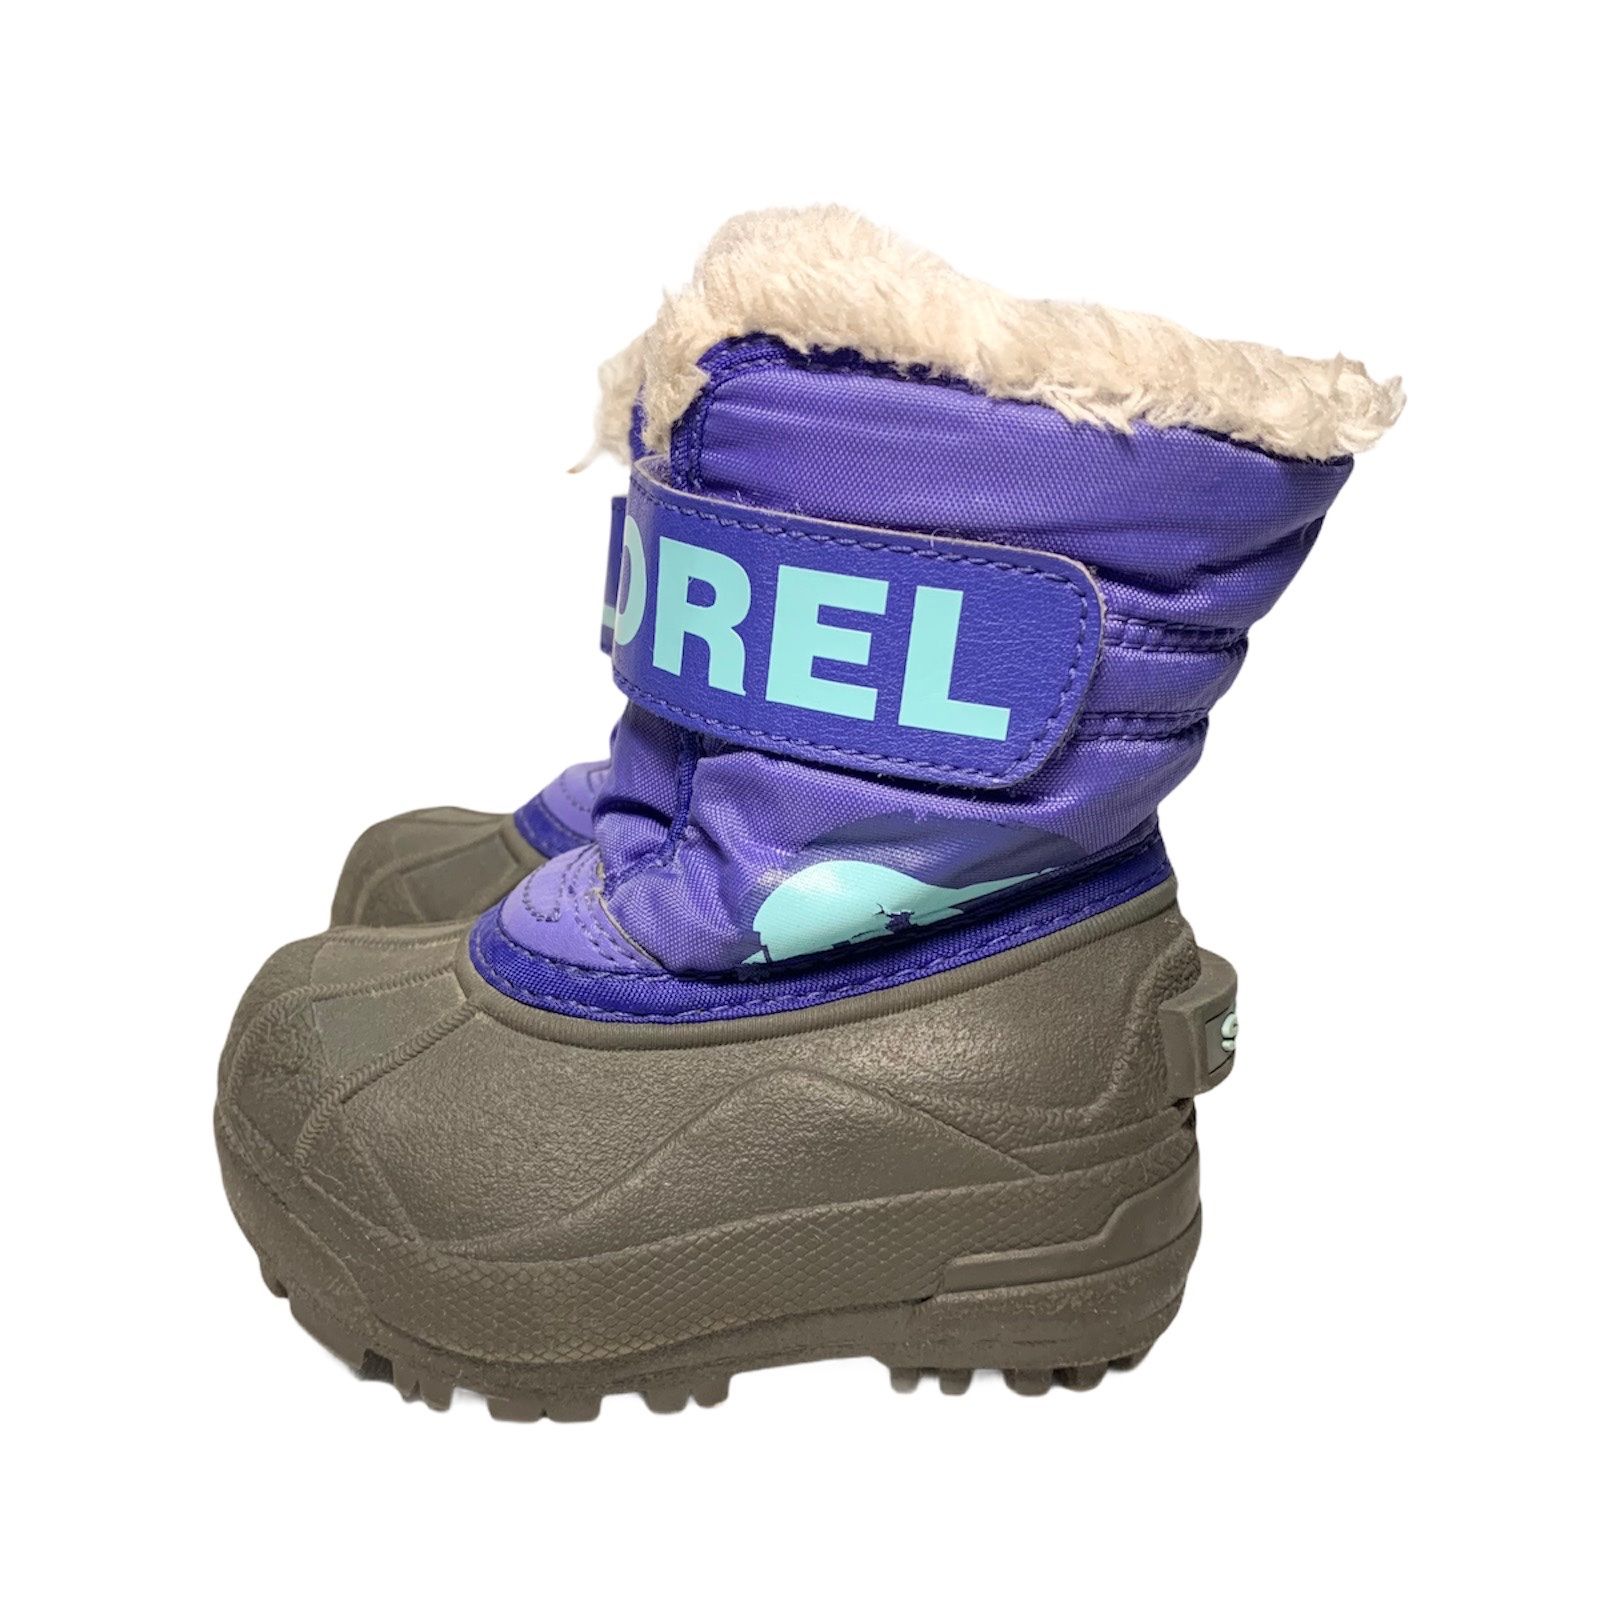 Sorel Snow Commander Purple Boots Faux Fur NV1877-546 Toddler Girls Size 5